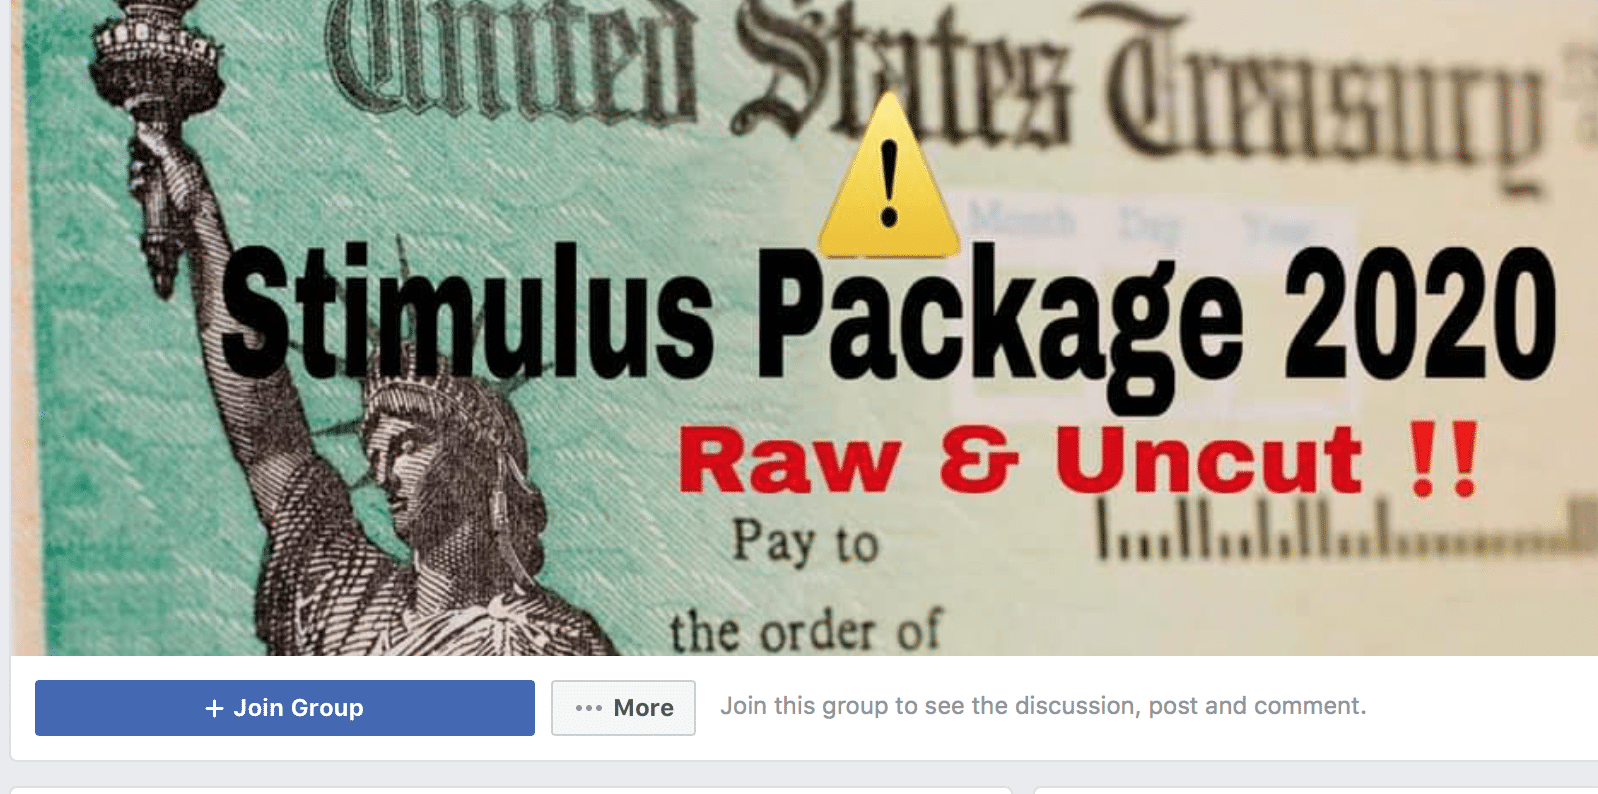 Facebook stimulus page